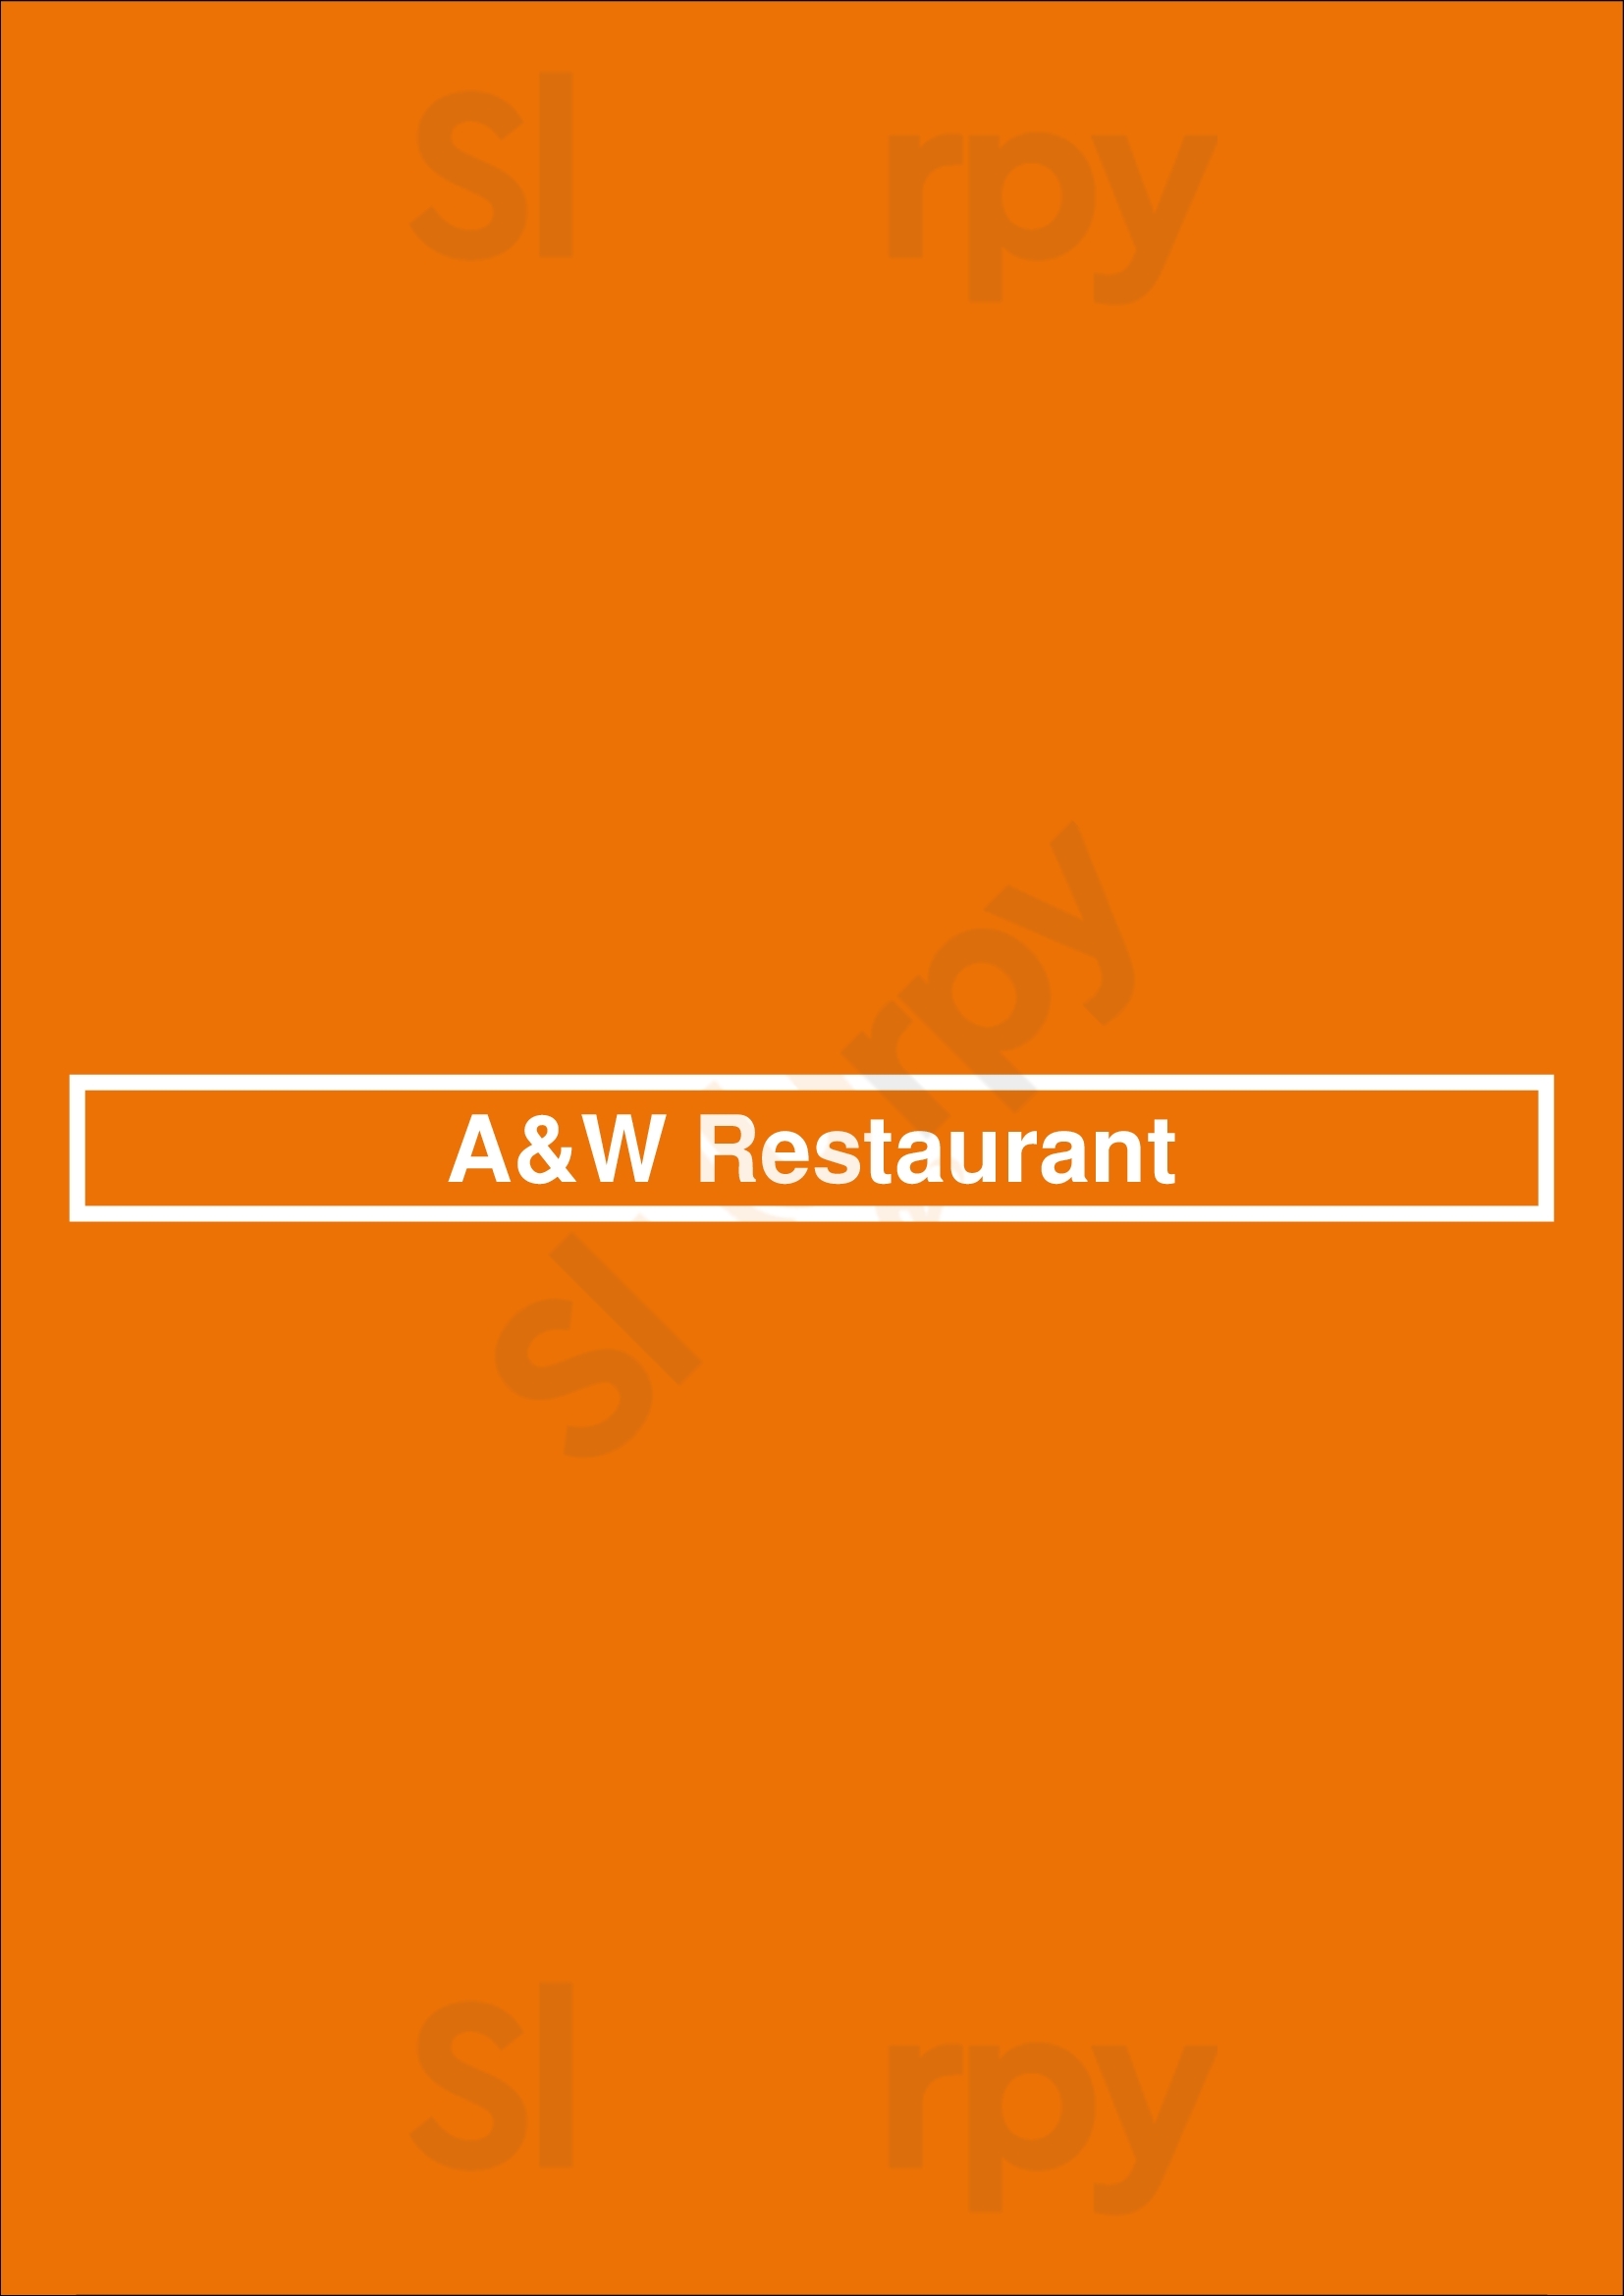 A&w Restaurant St. Catharines Menu - 1